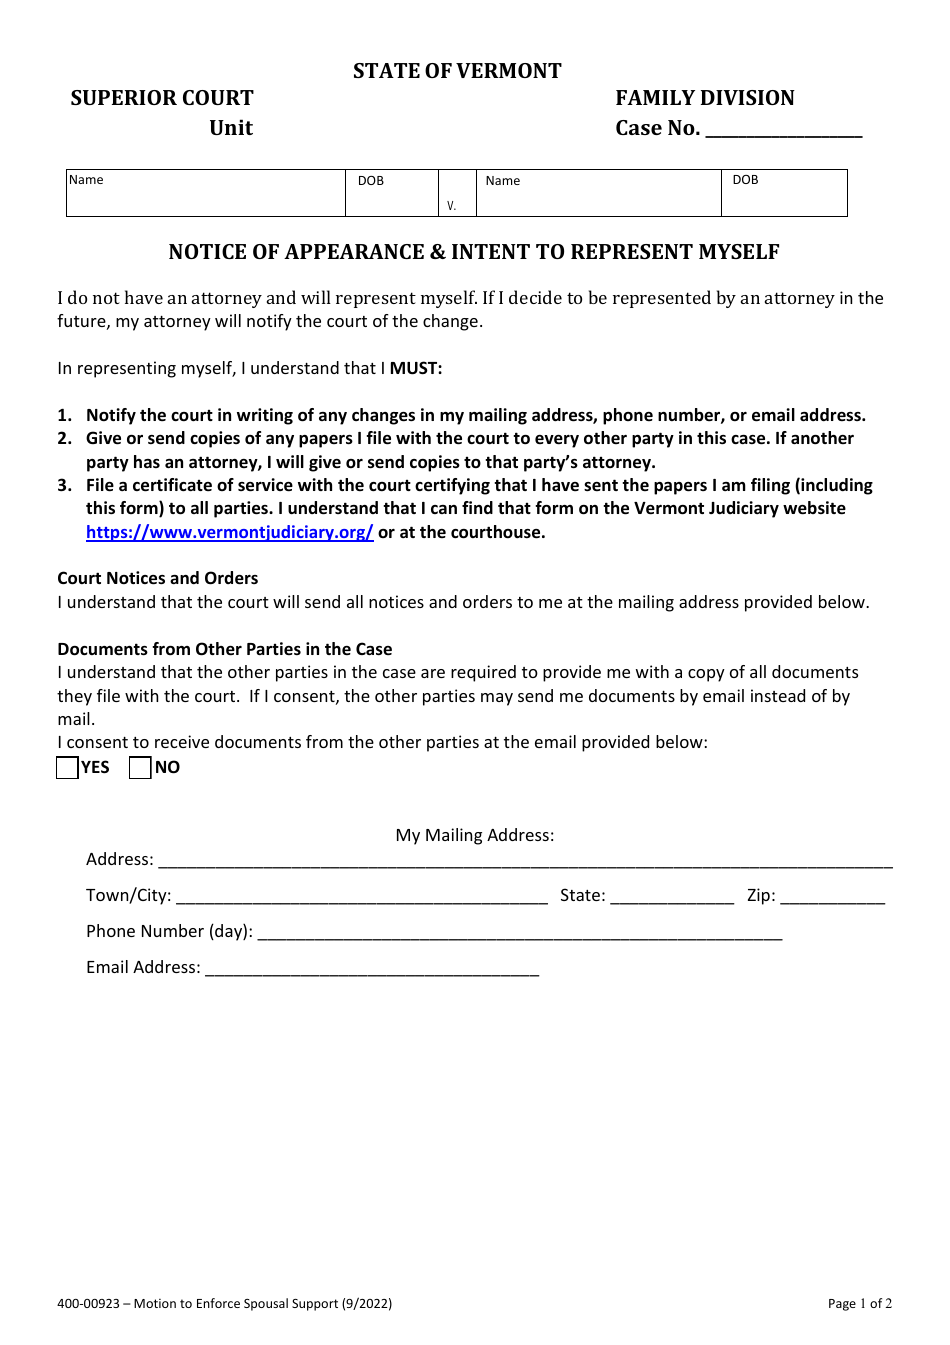 Form 400-00923 Motion to Enforce Spousal Maintenance - Vermont, Page 1